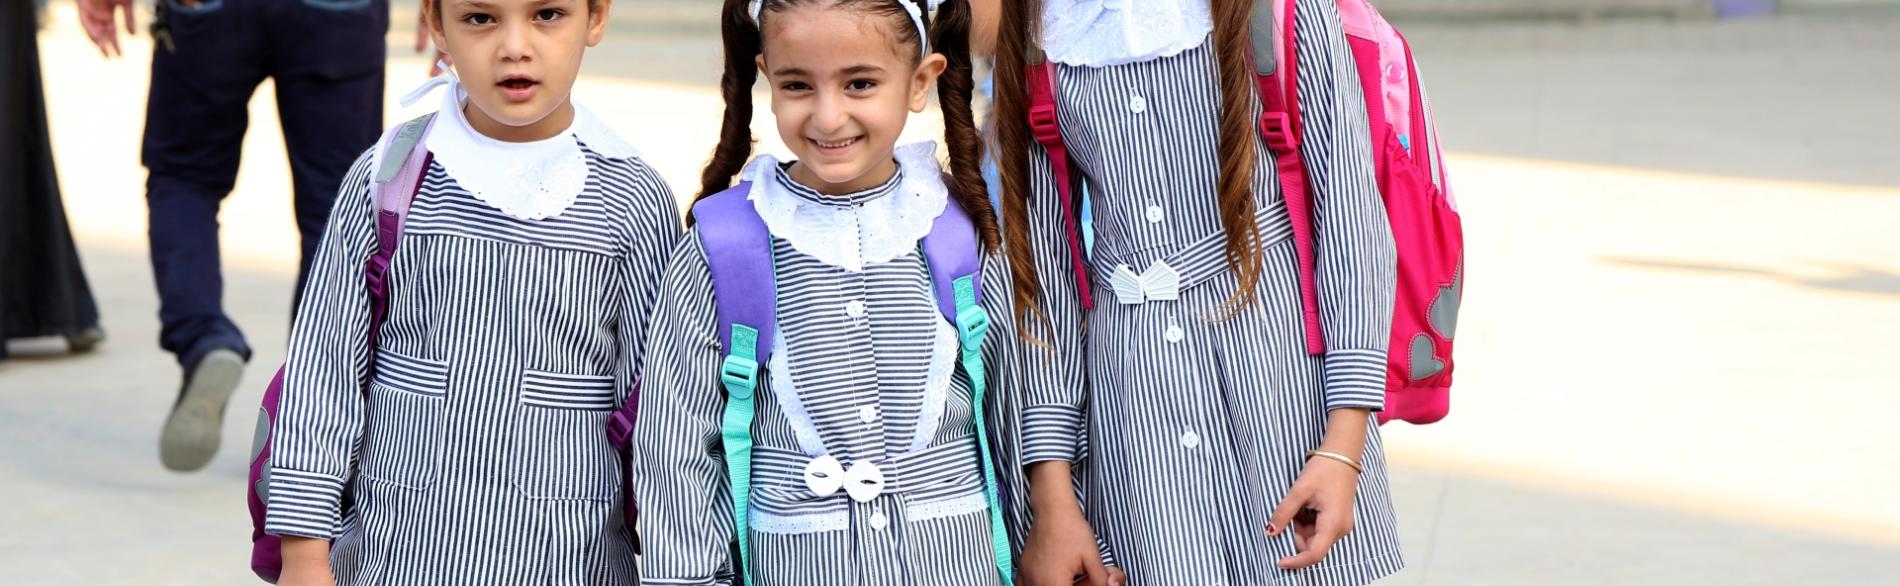 Beginning of new year at UNRWA school, Gaza. © Photo Credit: Khalil Adwan/ UNRWA